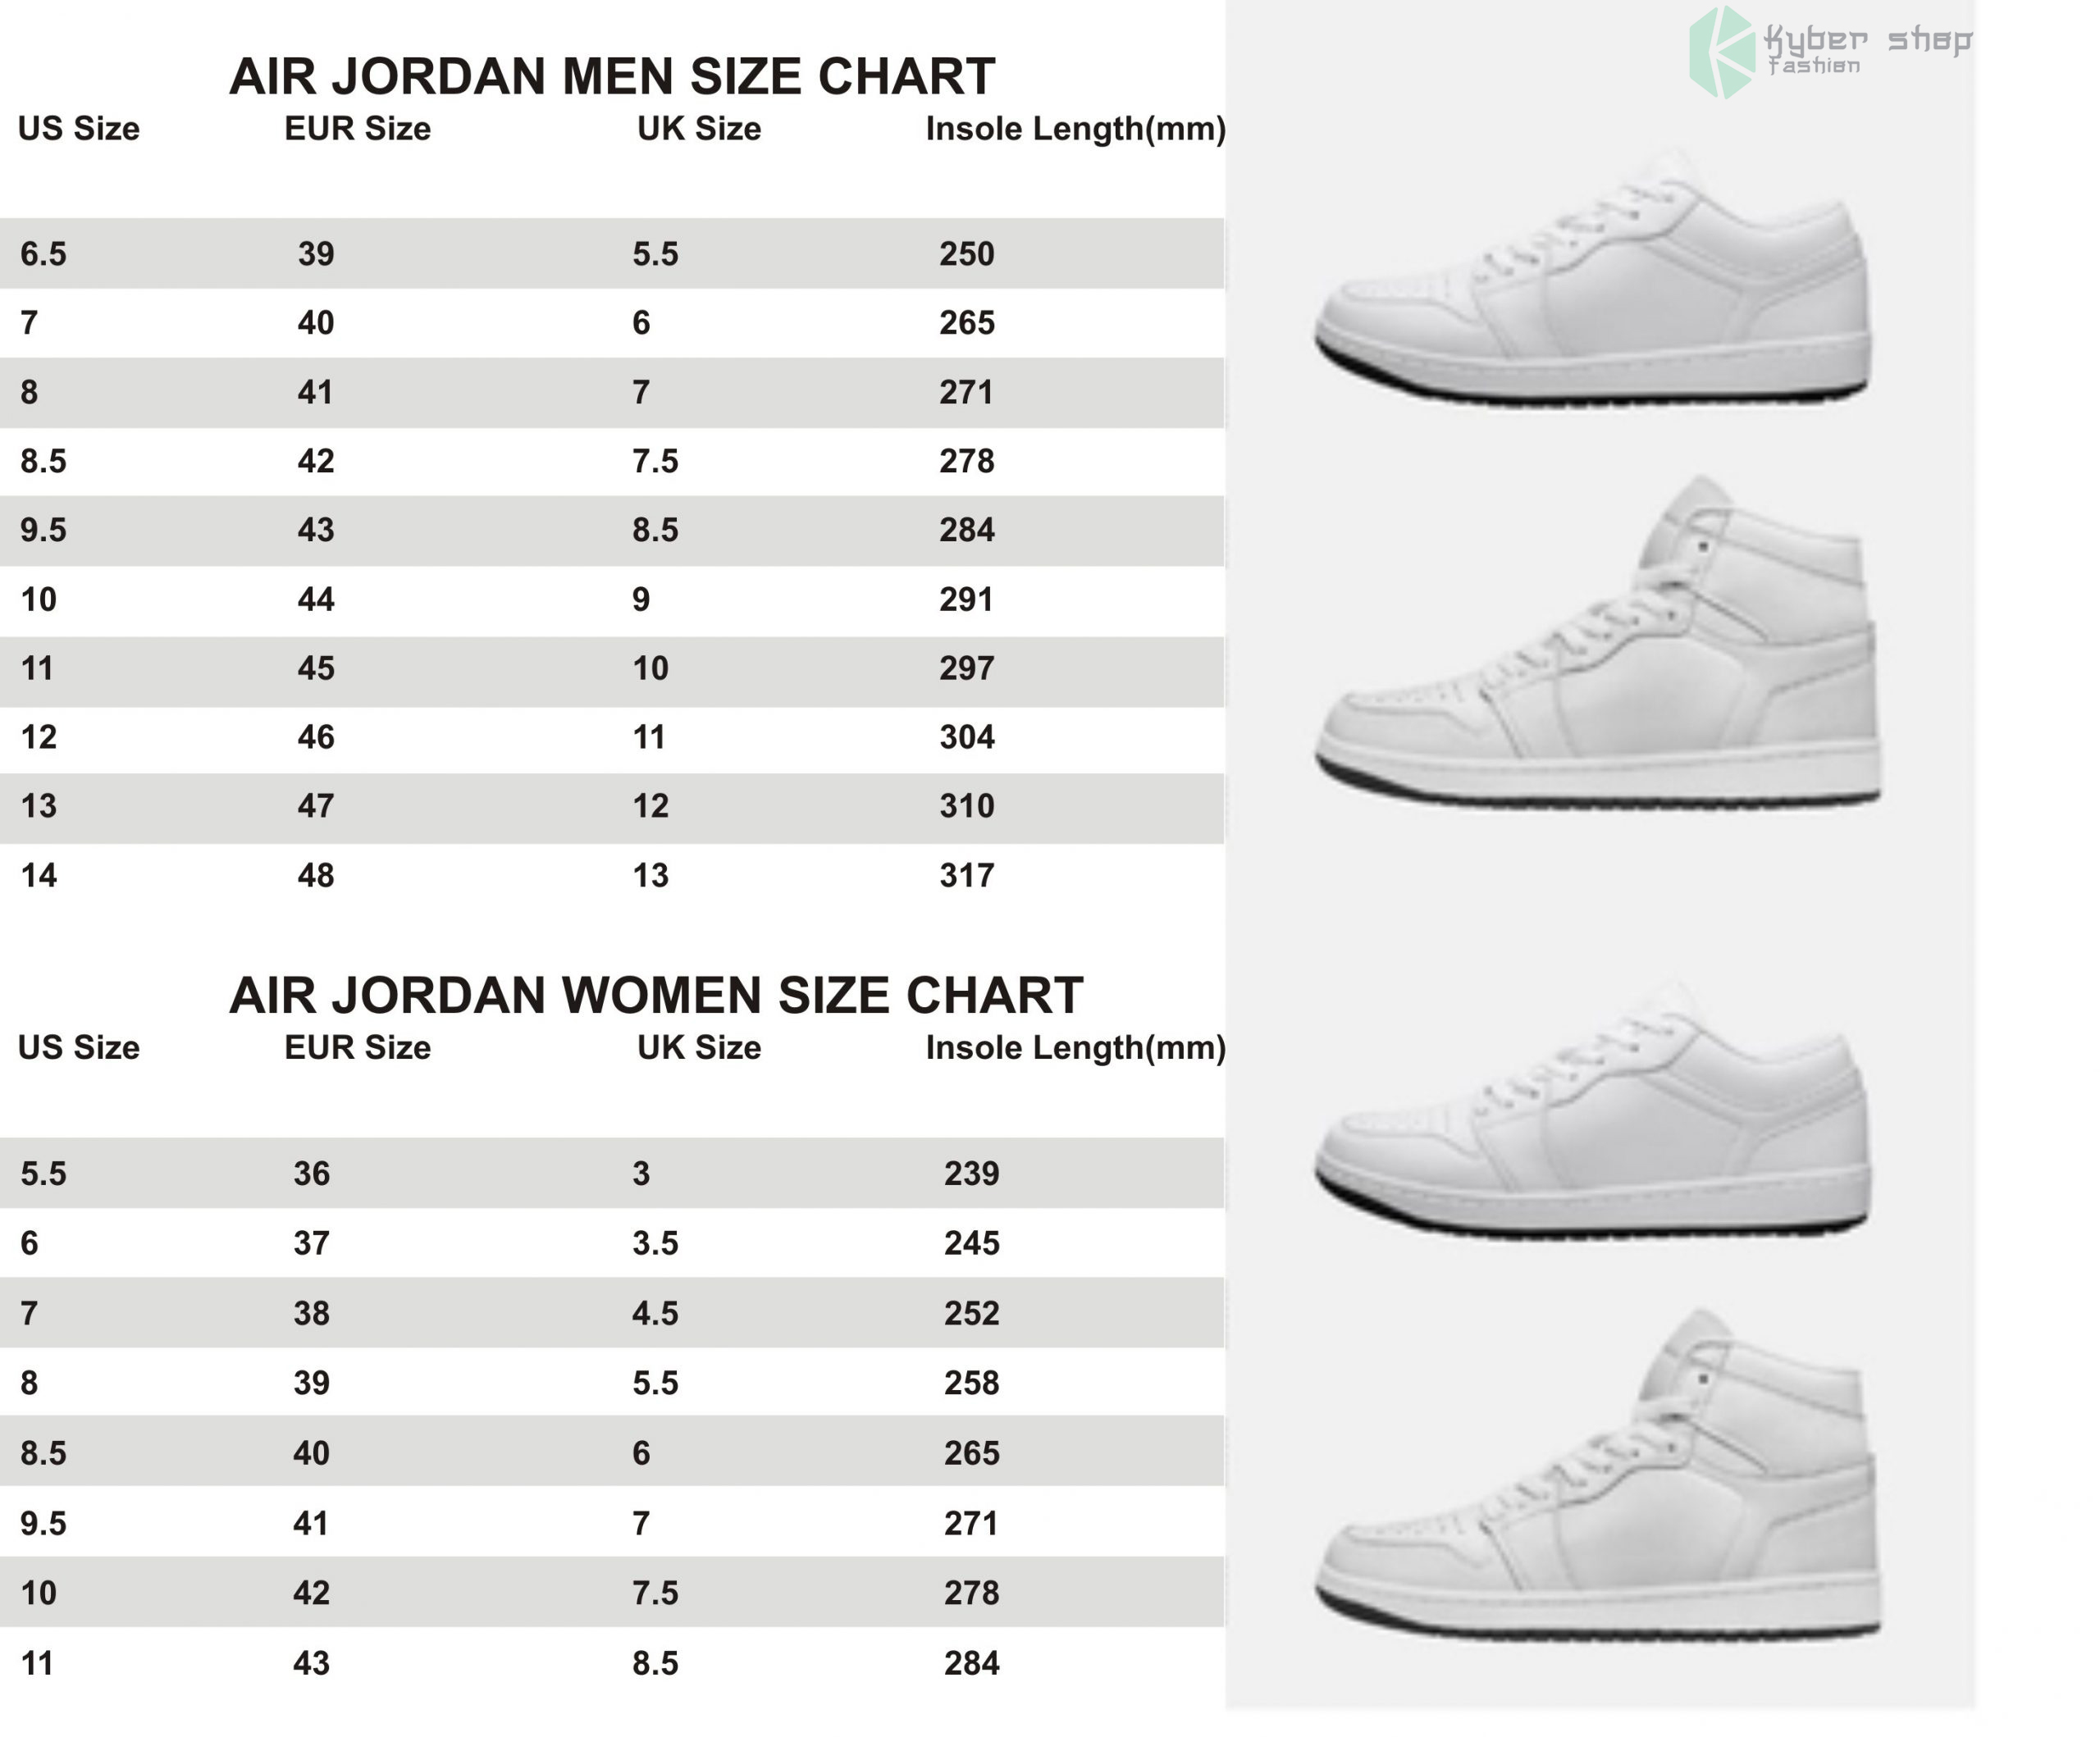 Air Jordan High Top Shoes Size Chart Kybershop